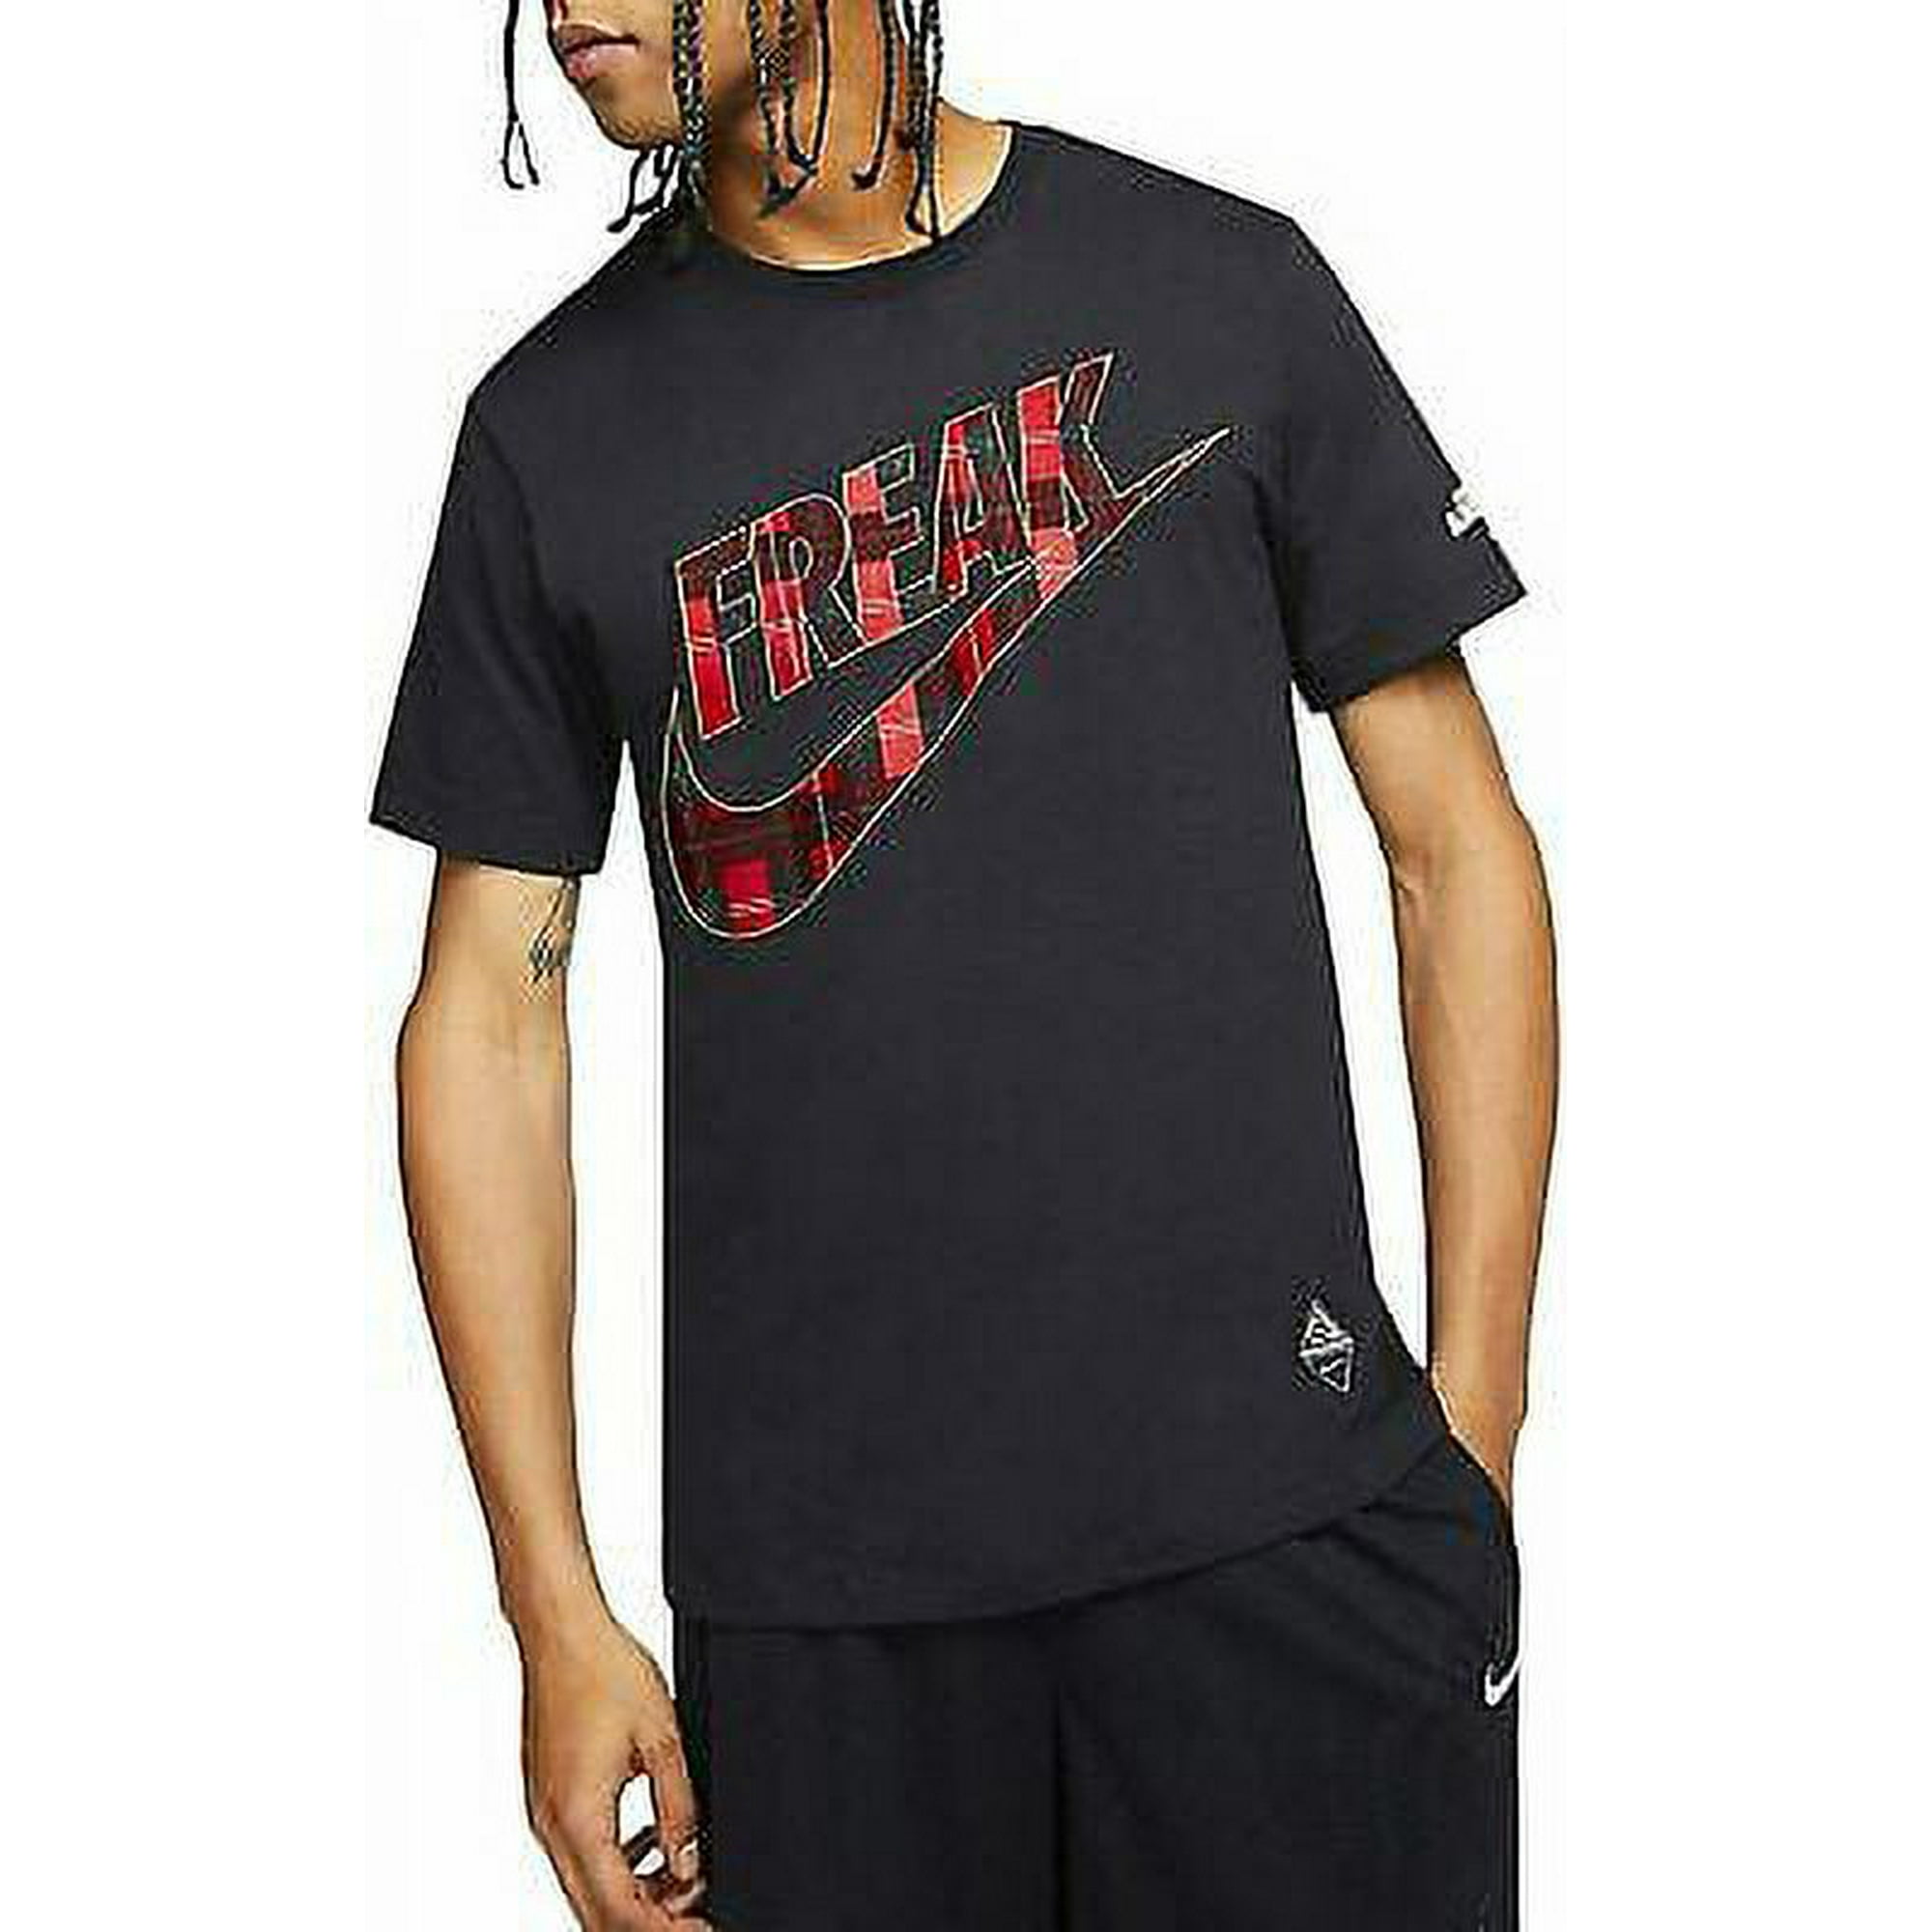 Nike Giannis 'Freak' (Black) Men's Basketball T-Shirt Size XL 